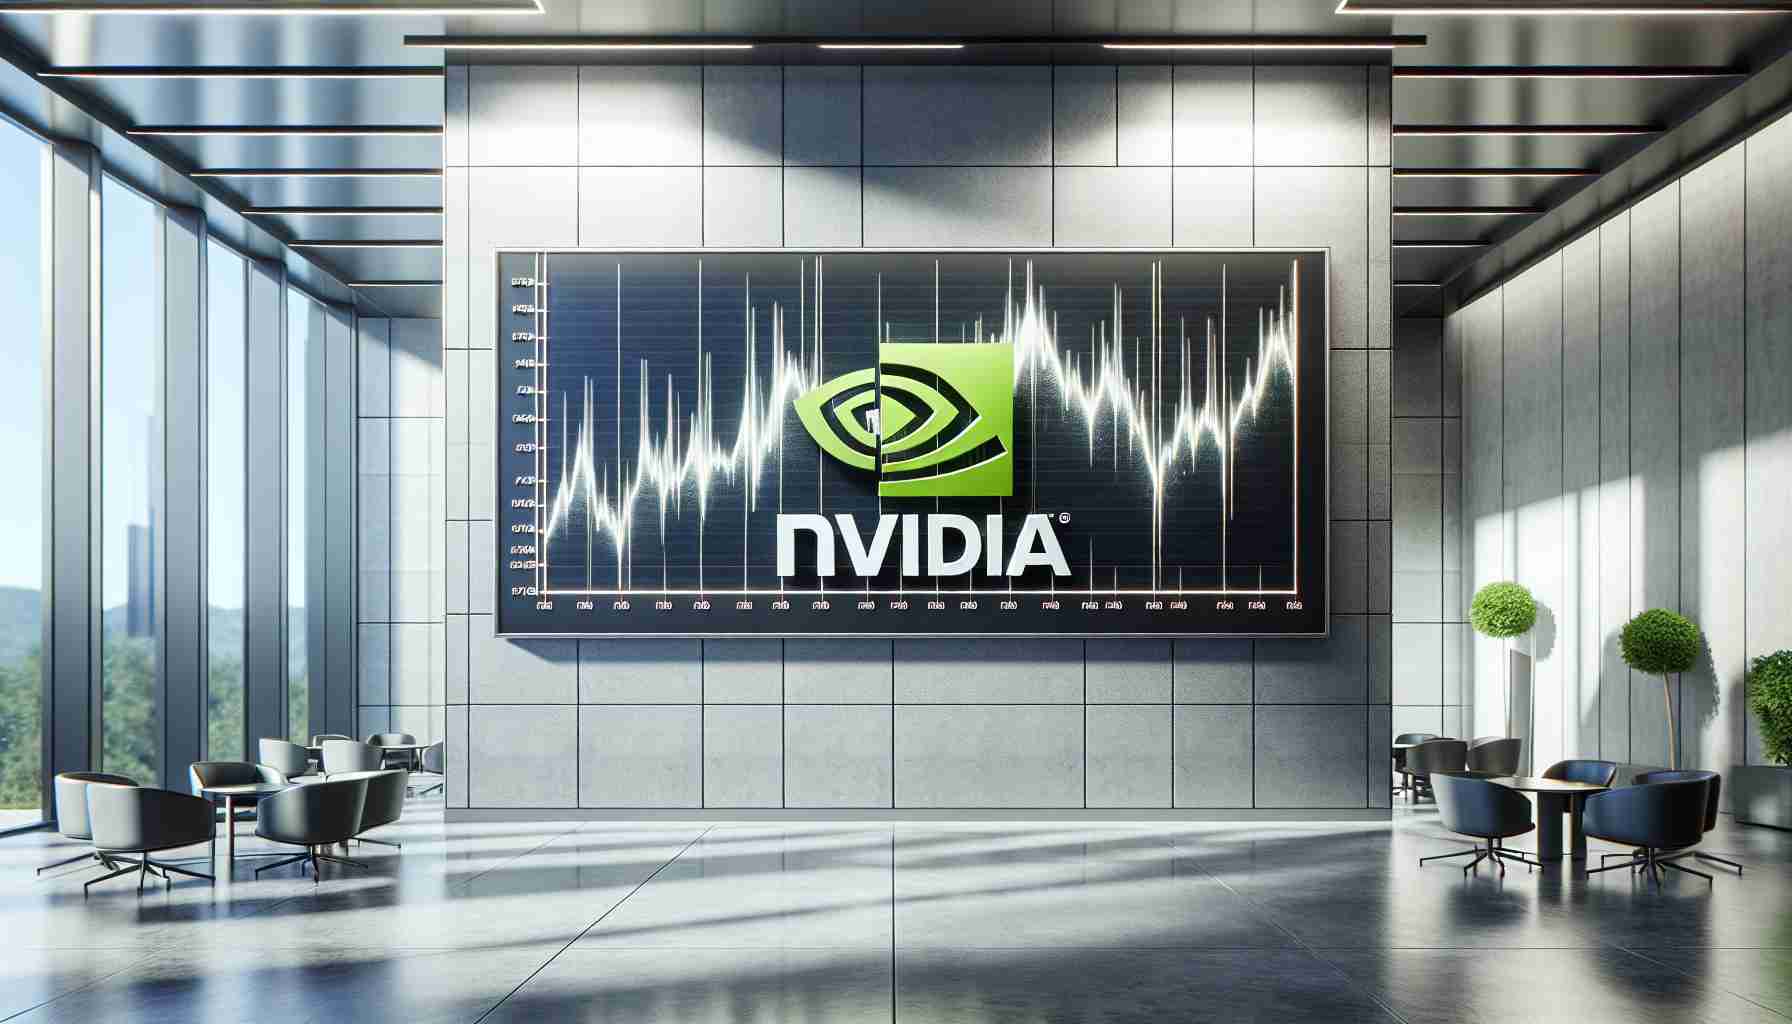 Impressive Corporate Valuation Places Nvidia Amongst World’s Top Companies